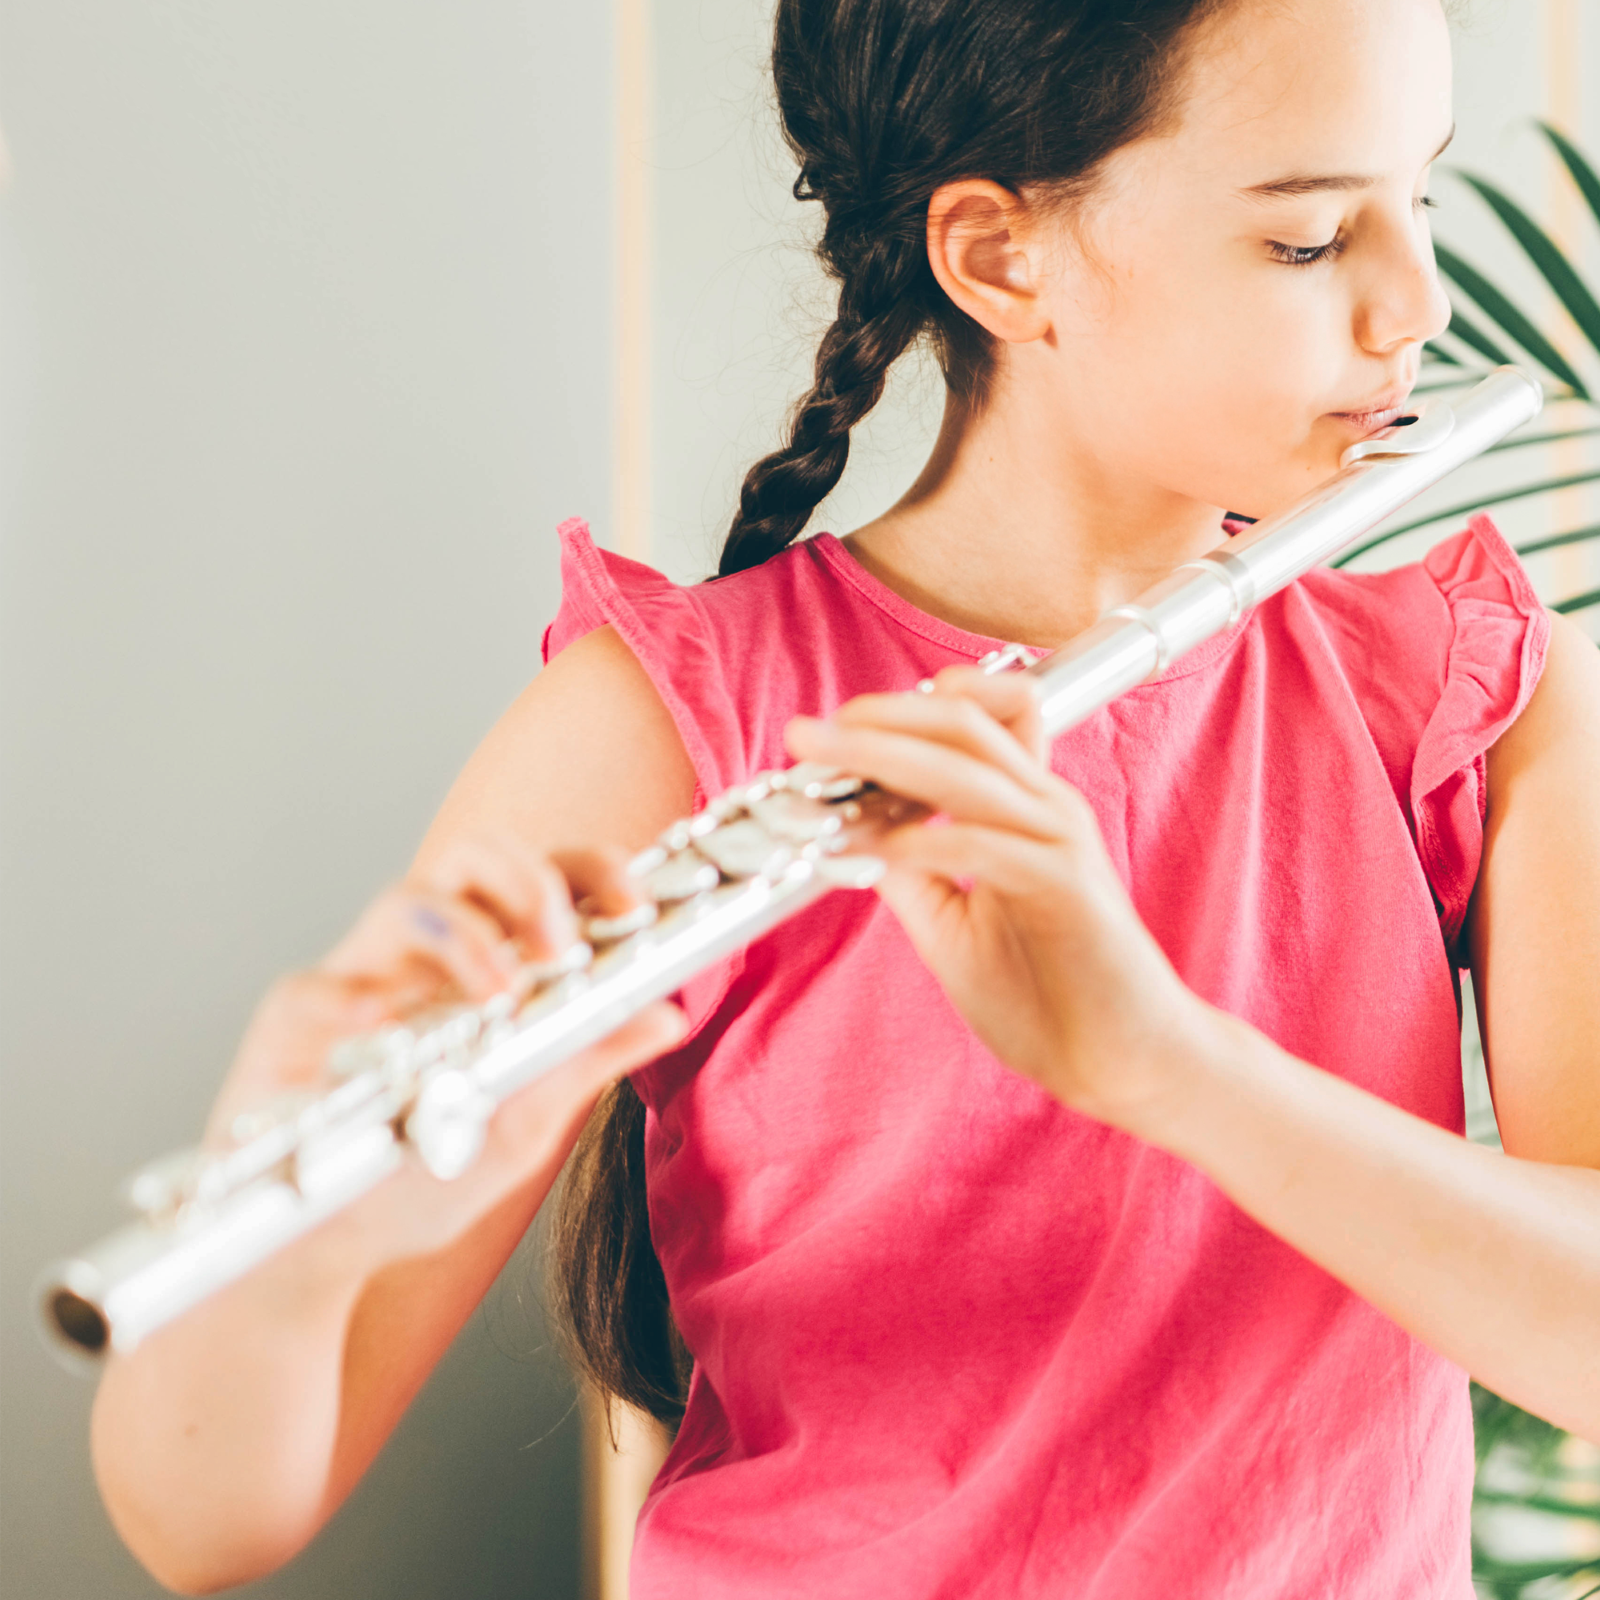 Adult flute lesson 60 minutes : photo 1